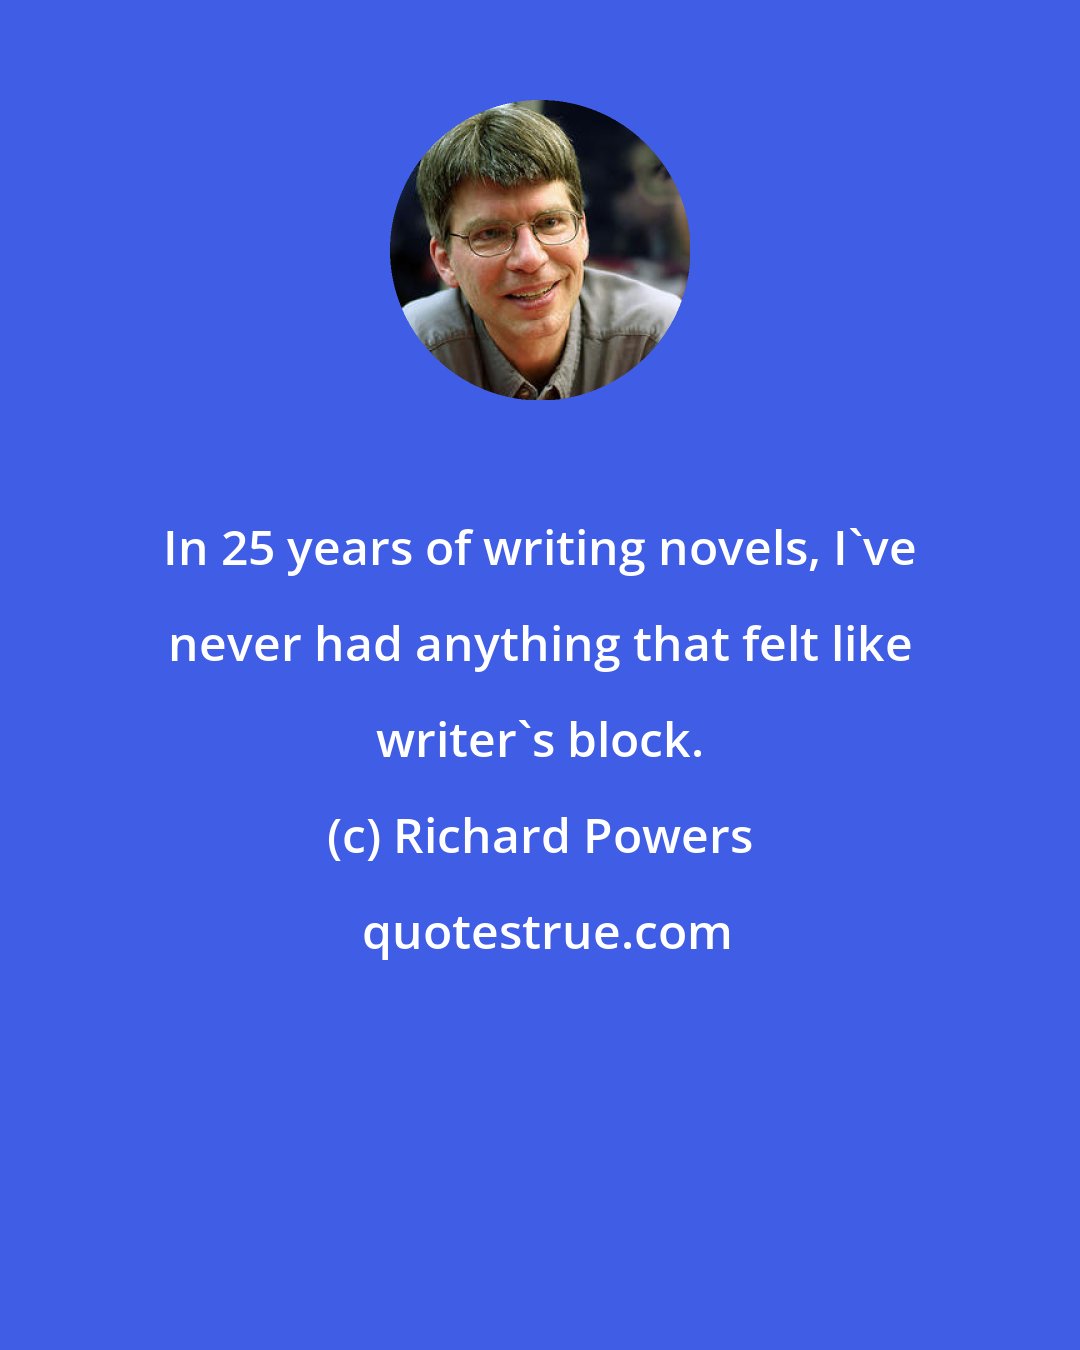 Richard Powers: In 25 years of writing novels, I've never had anything that felt like writer's block.